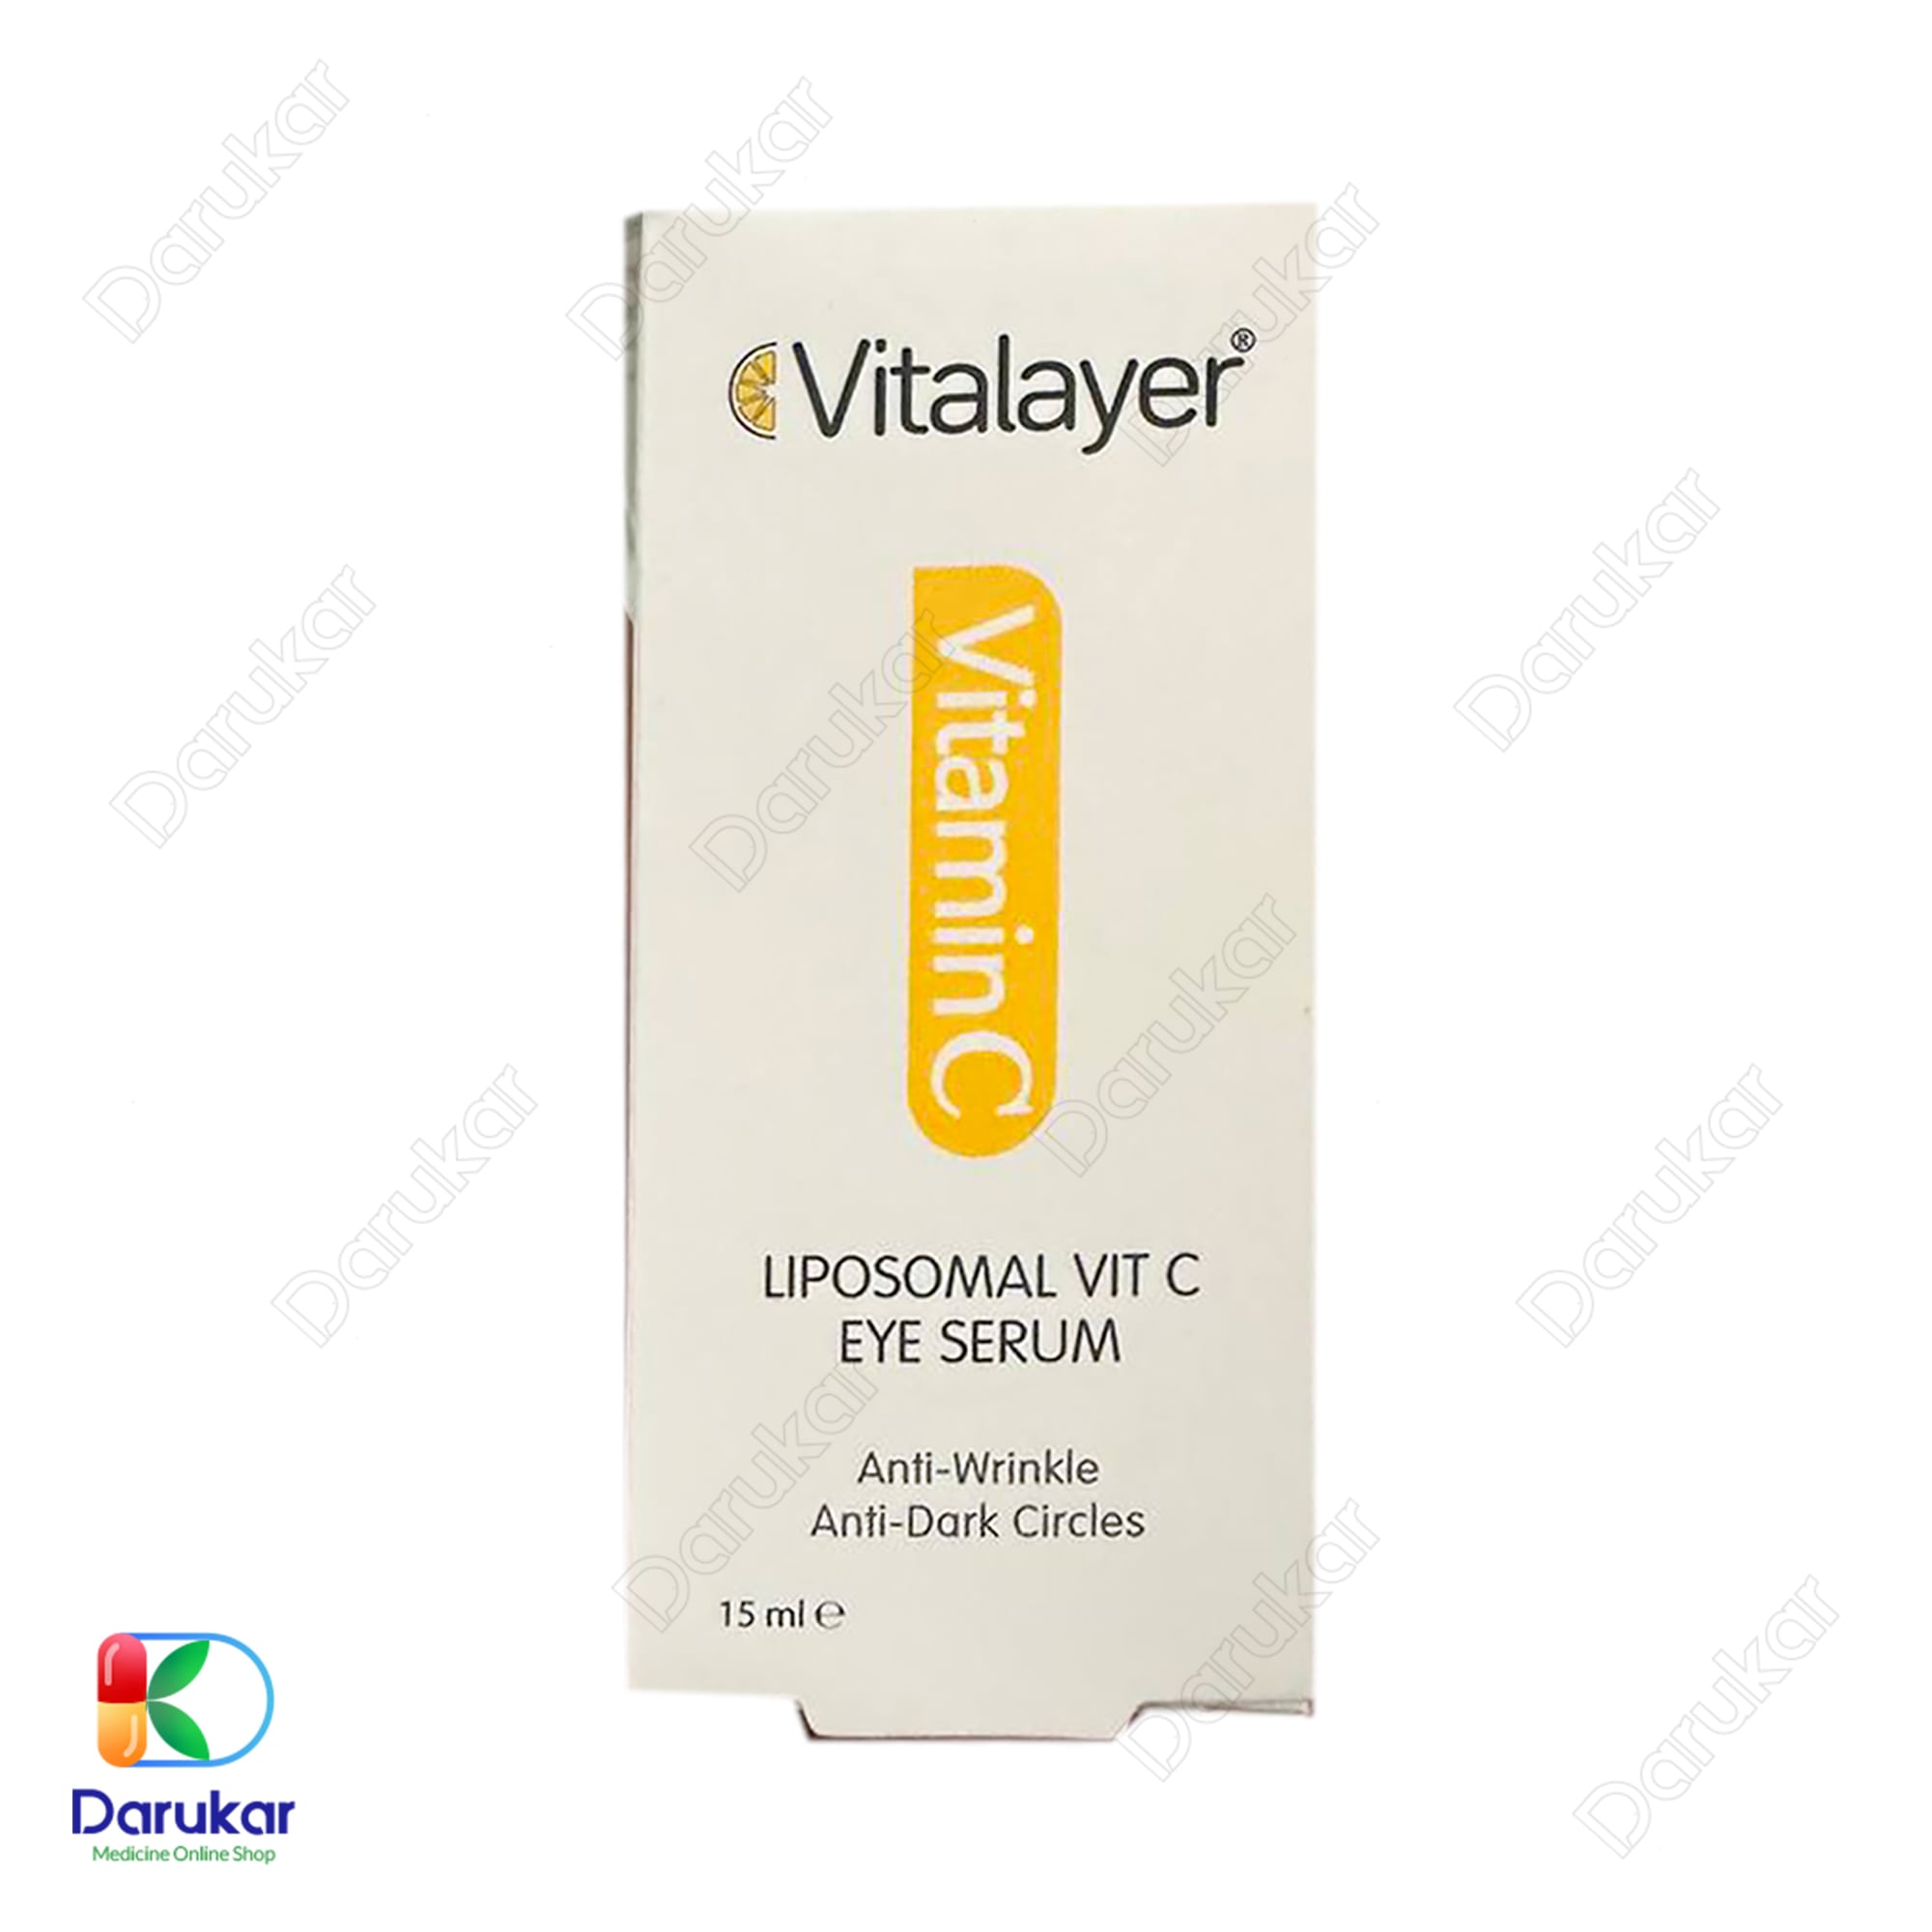 Vitalayer Liposomal Vit C Eye Serum 15 ml 1